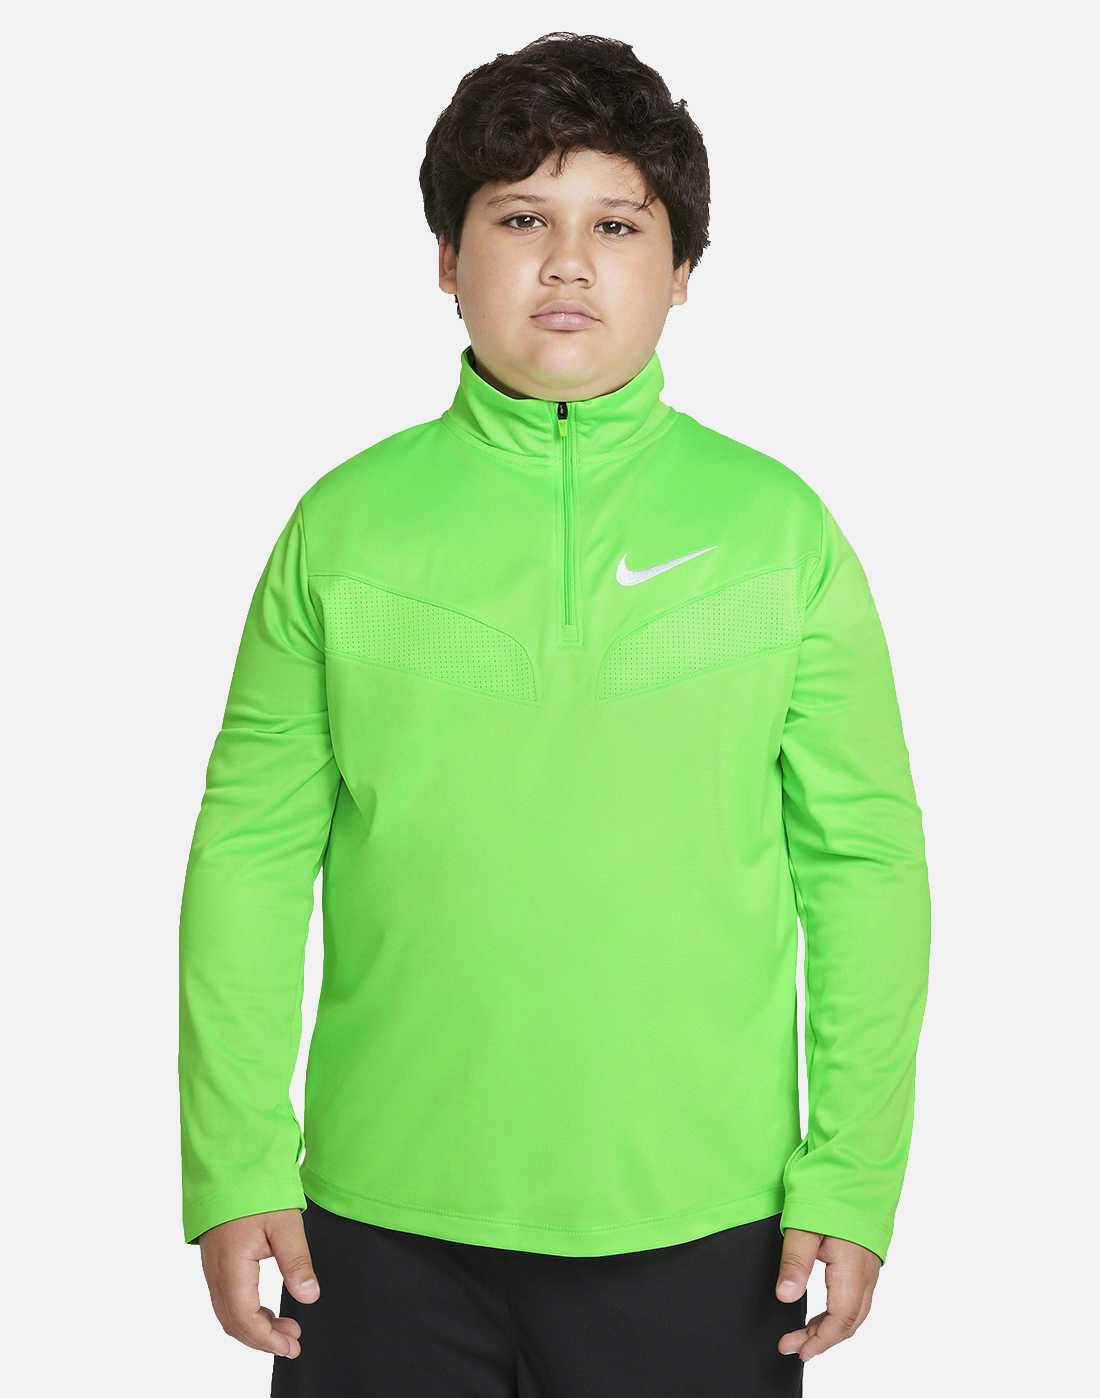 Nike Older Boys 1/4 Zip Long Sleeve Top - Green | Life Style Sports UK